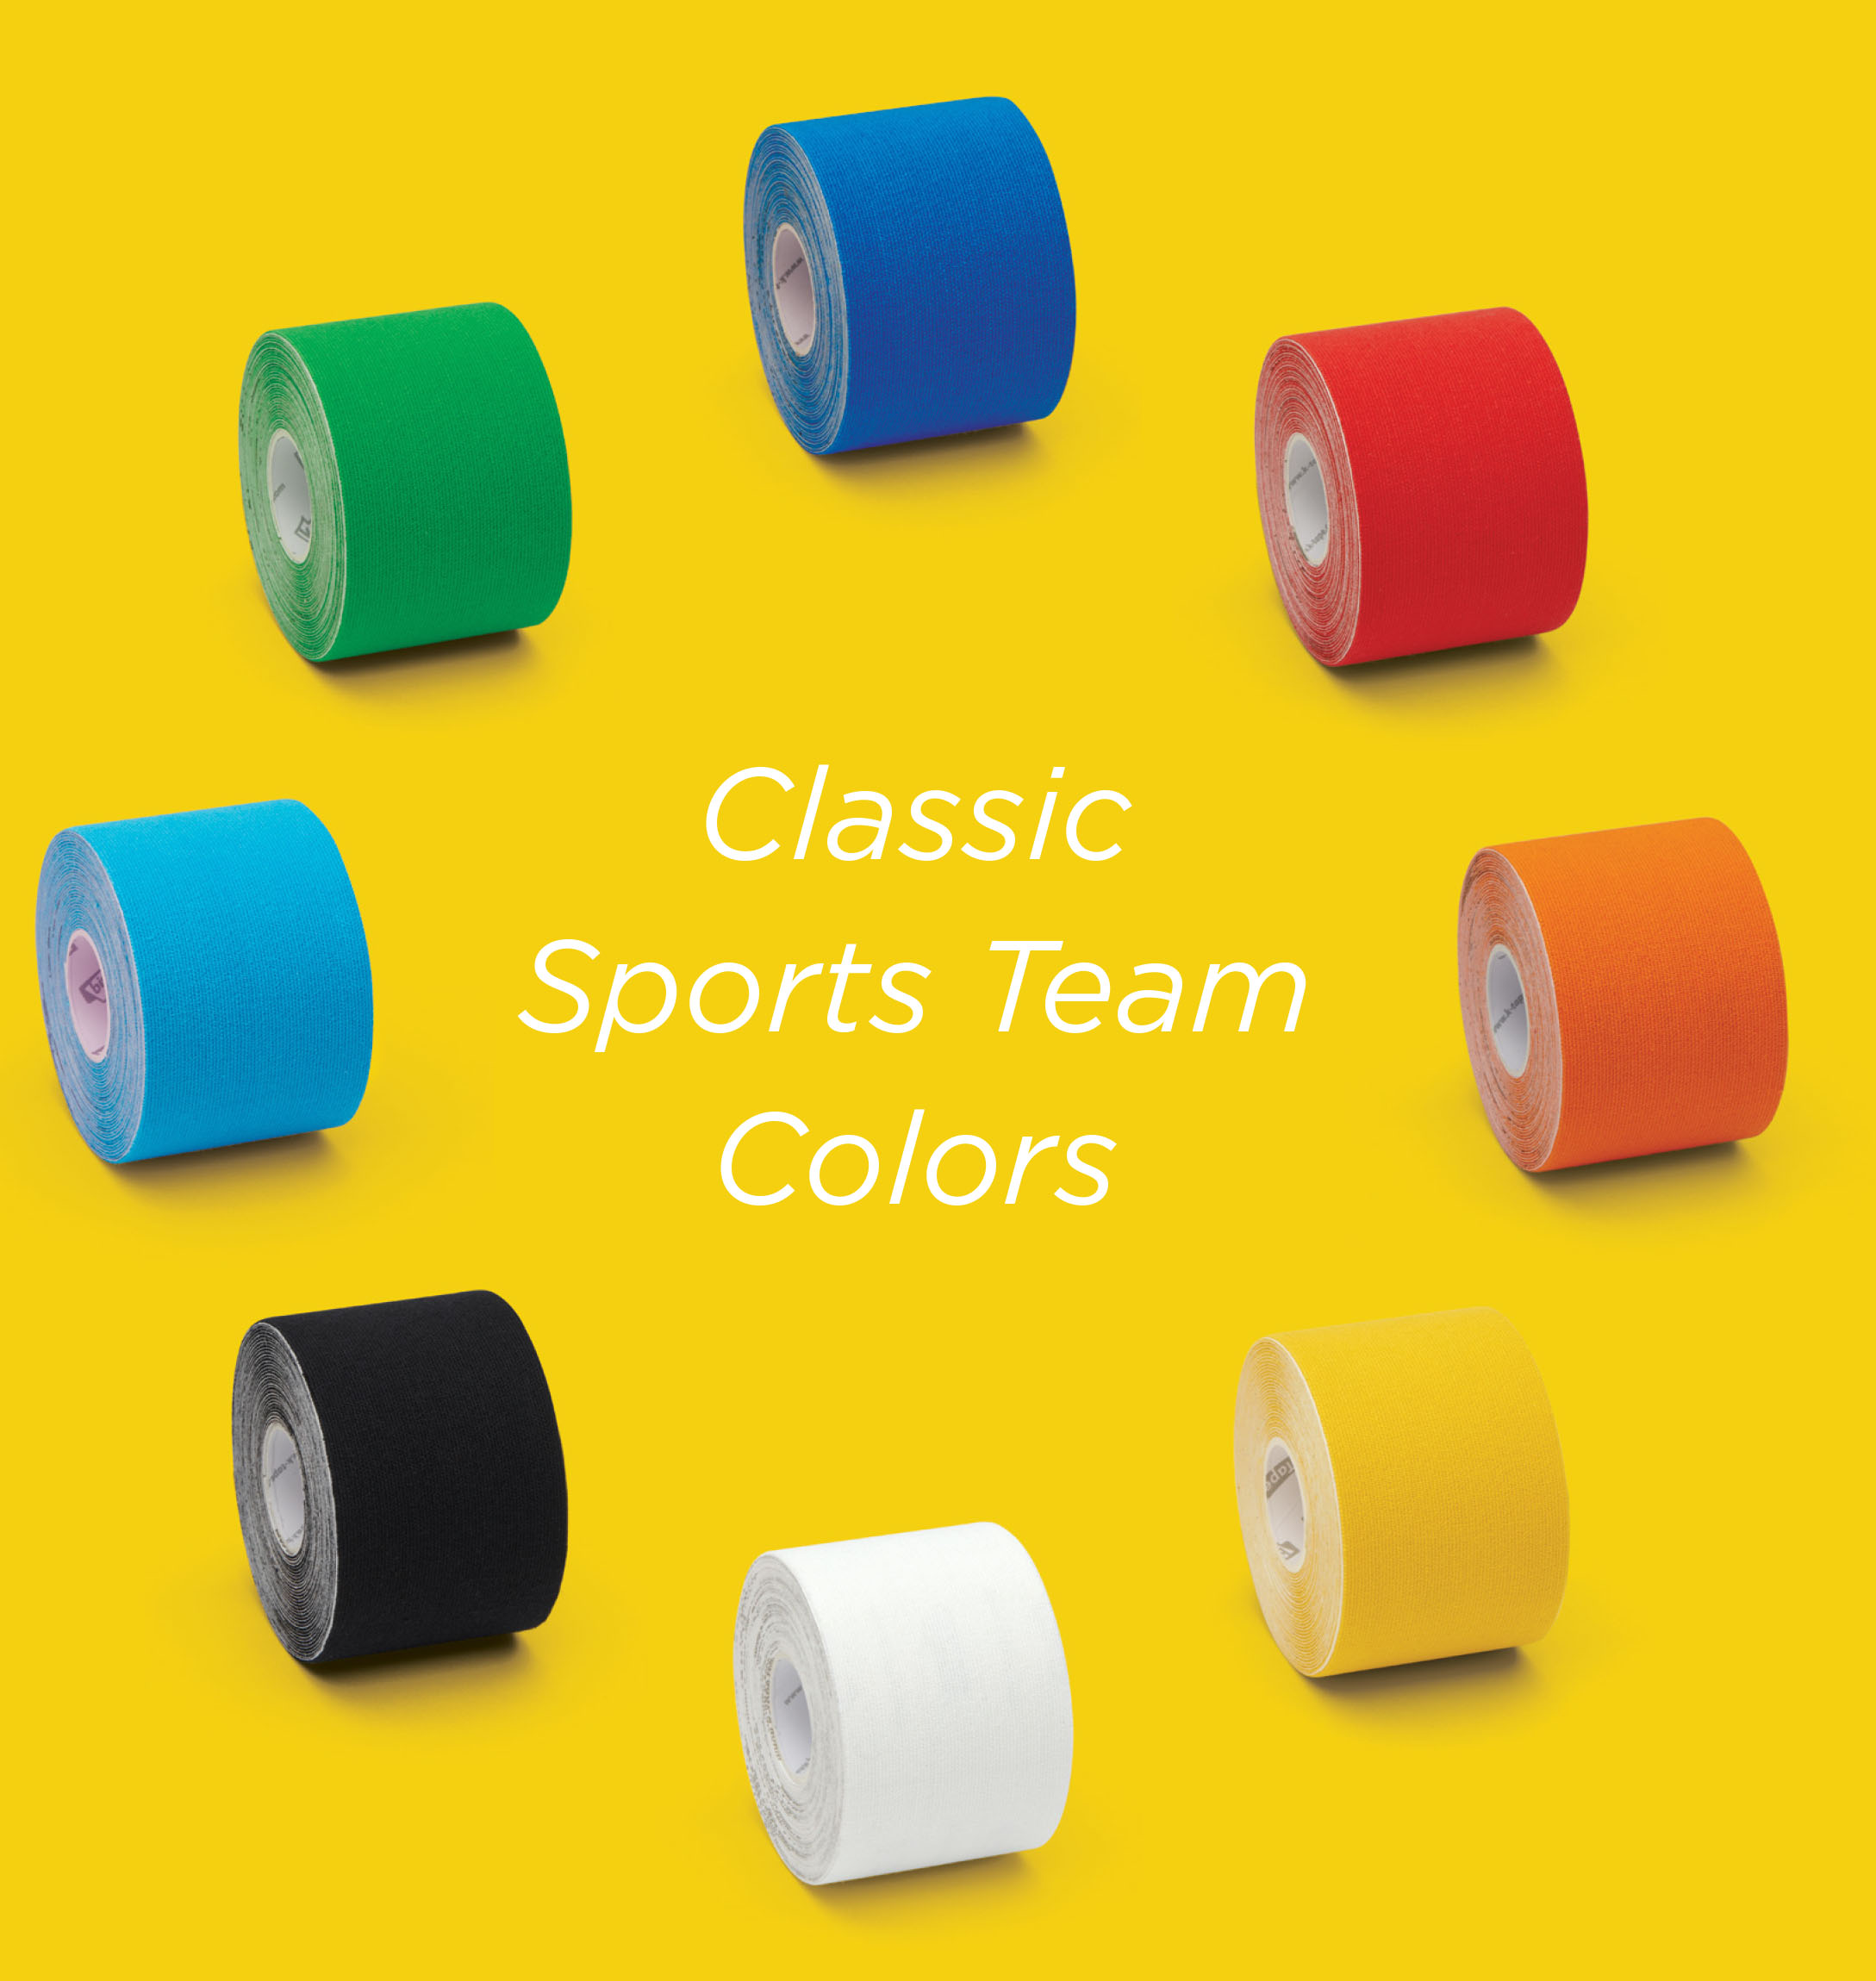 Classic Sports Team Colors